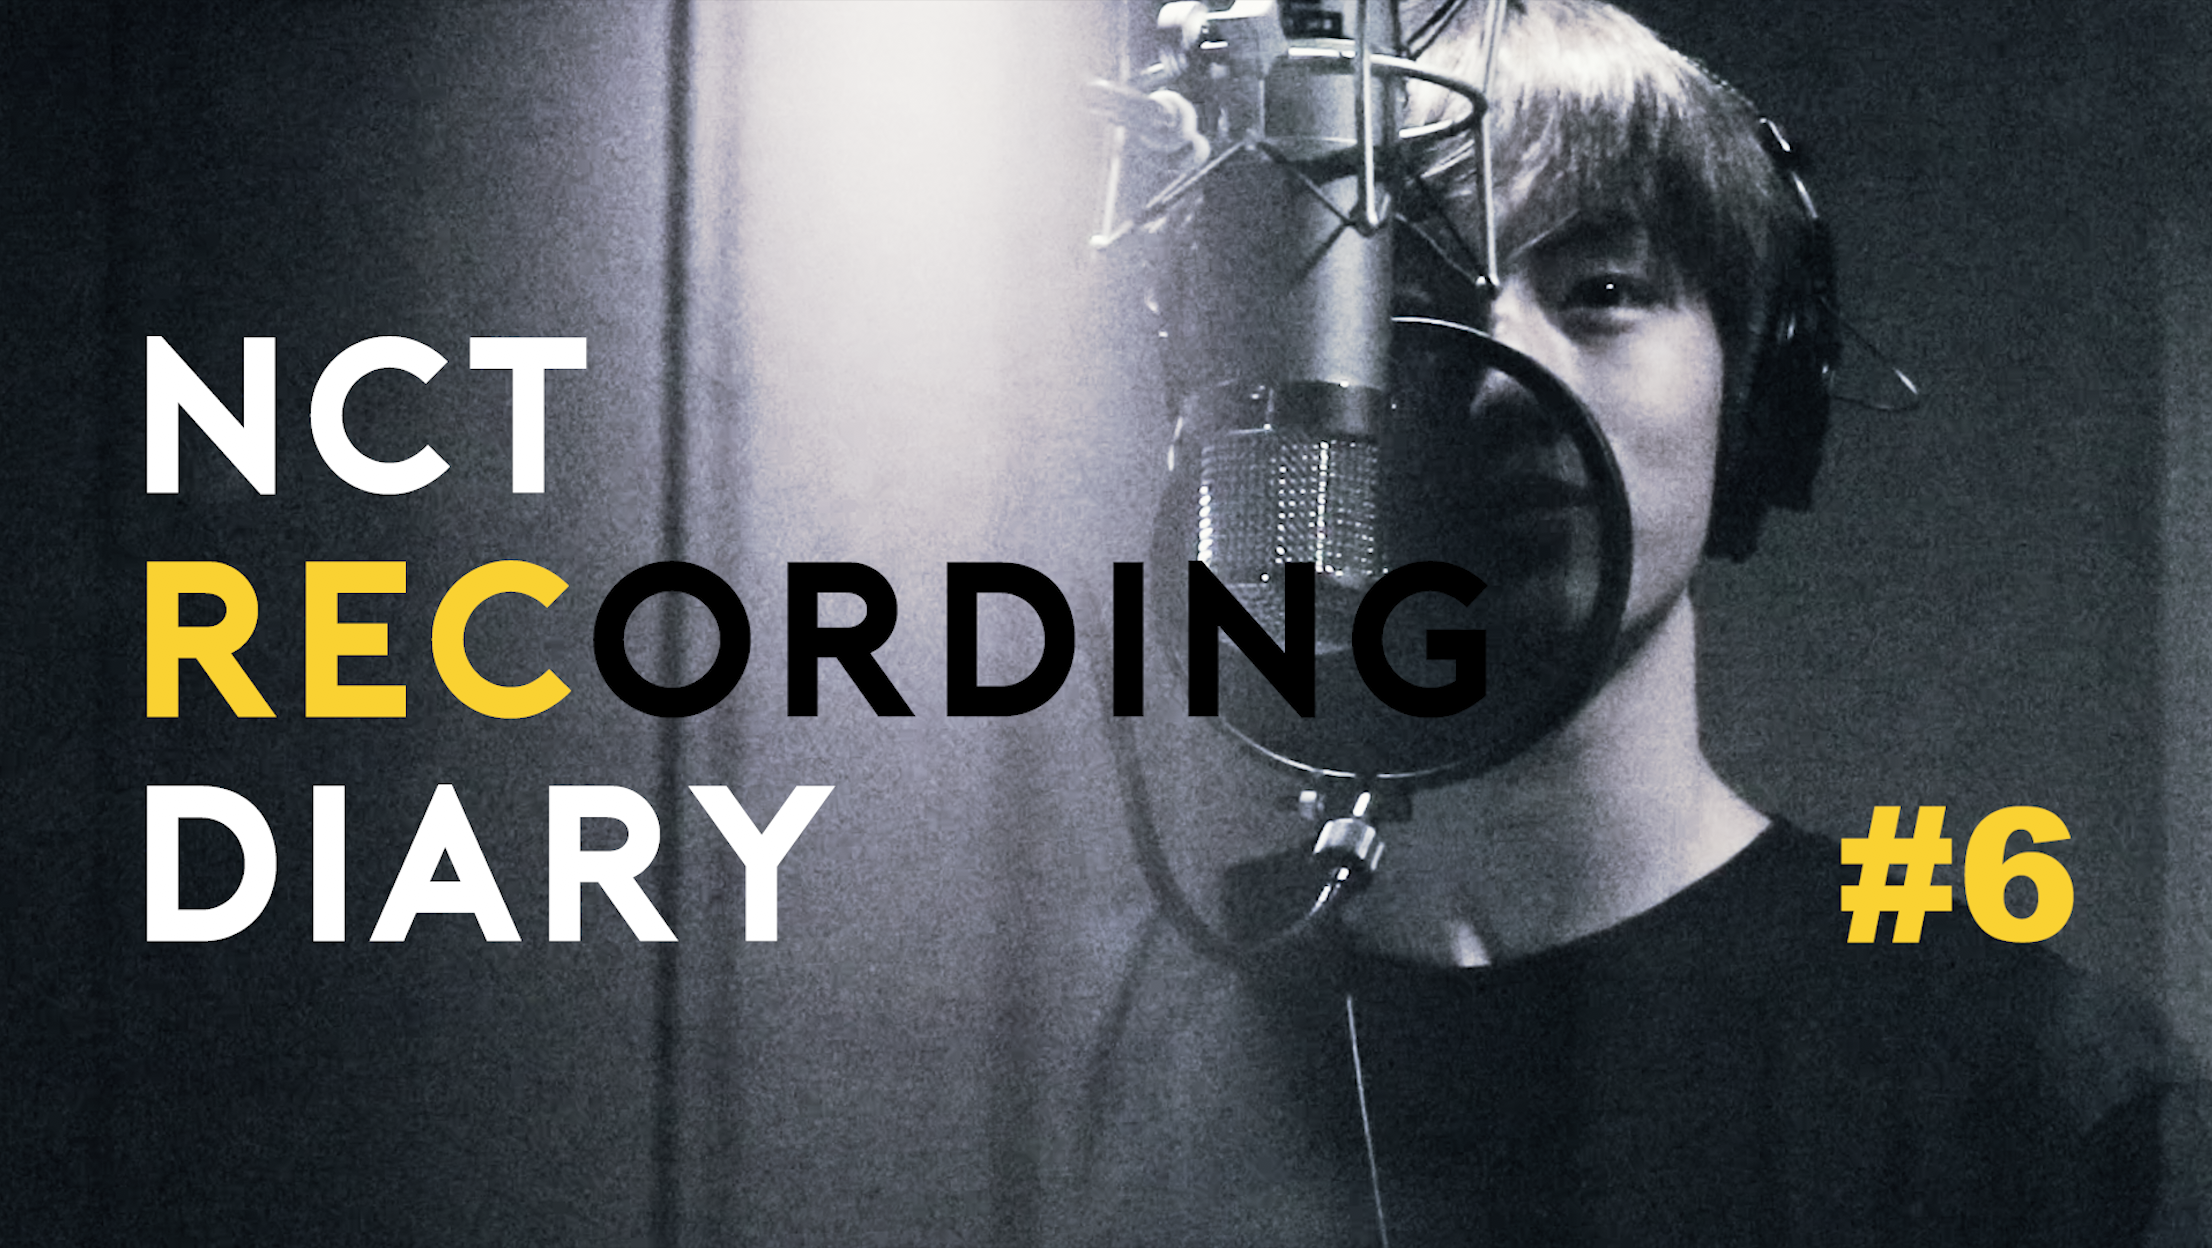 NCT RECORDING DIARY #6